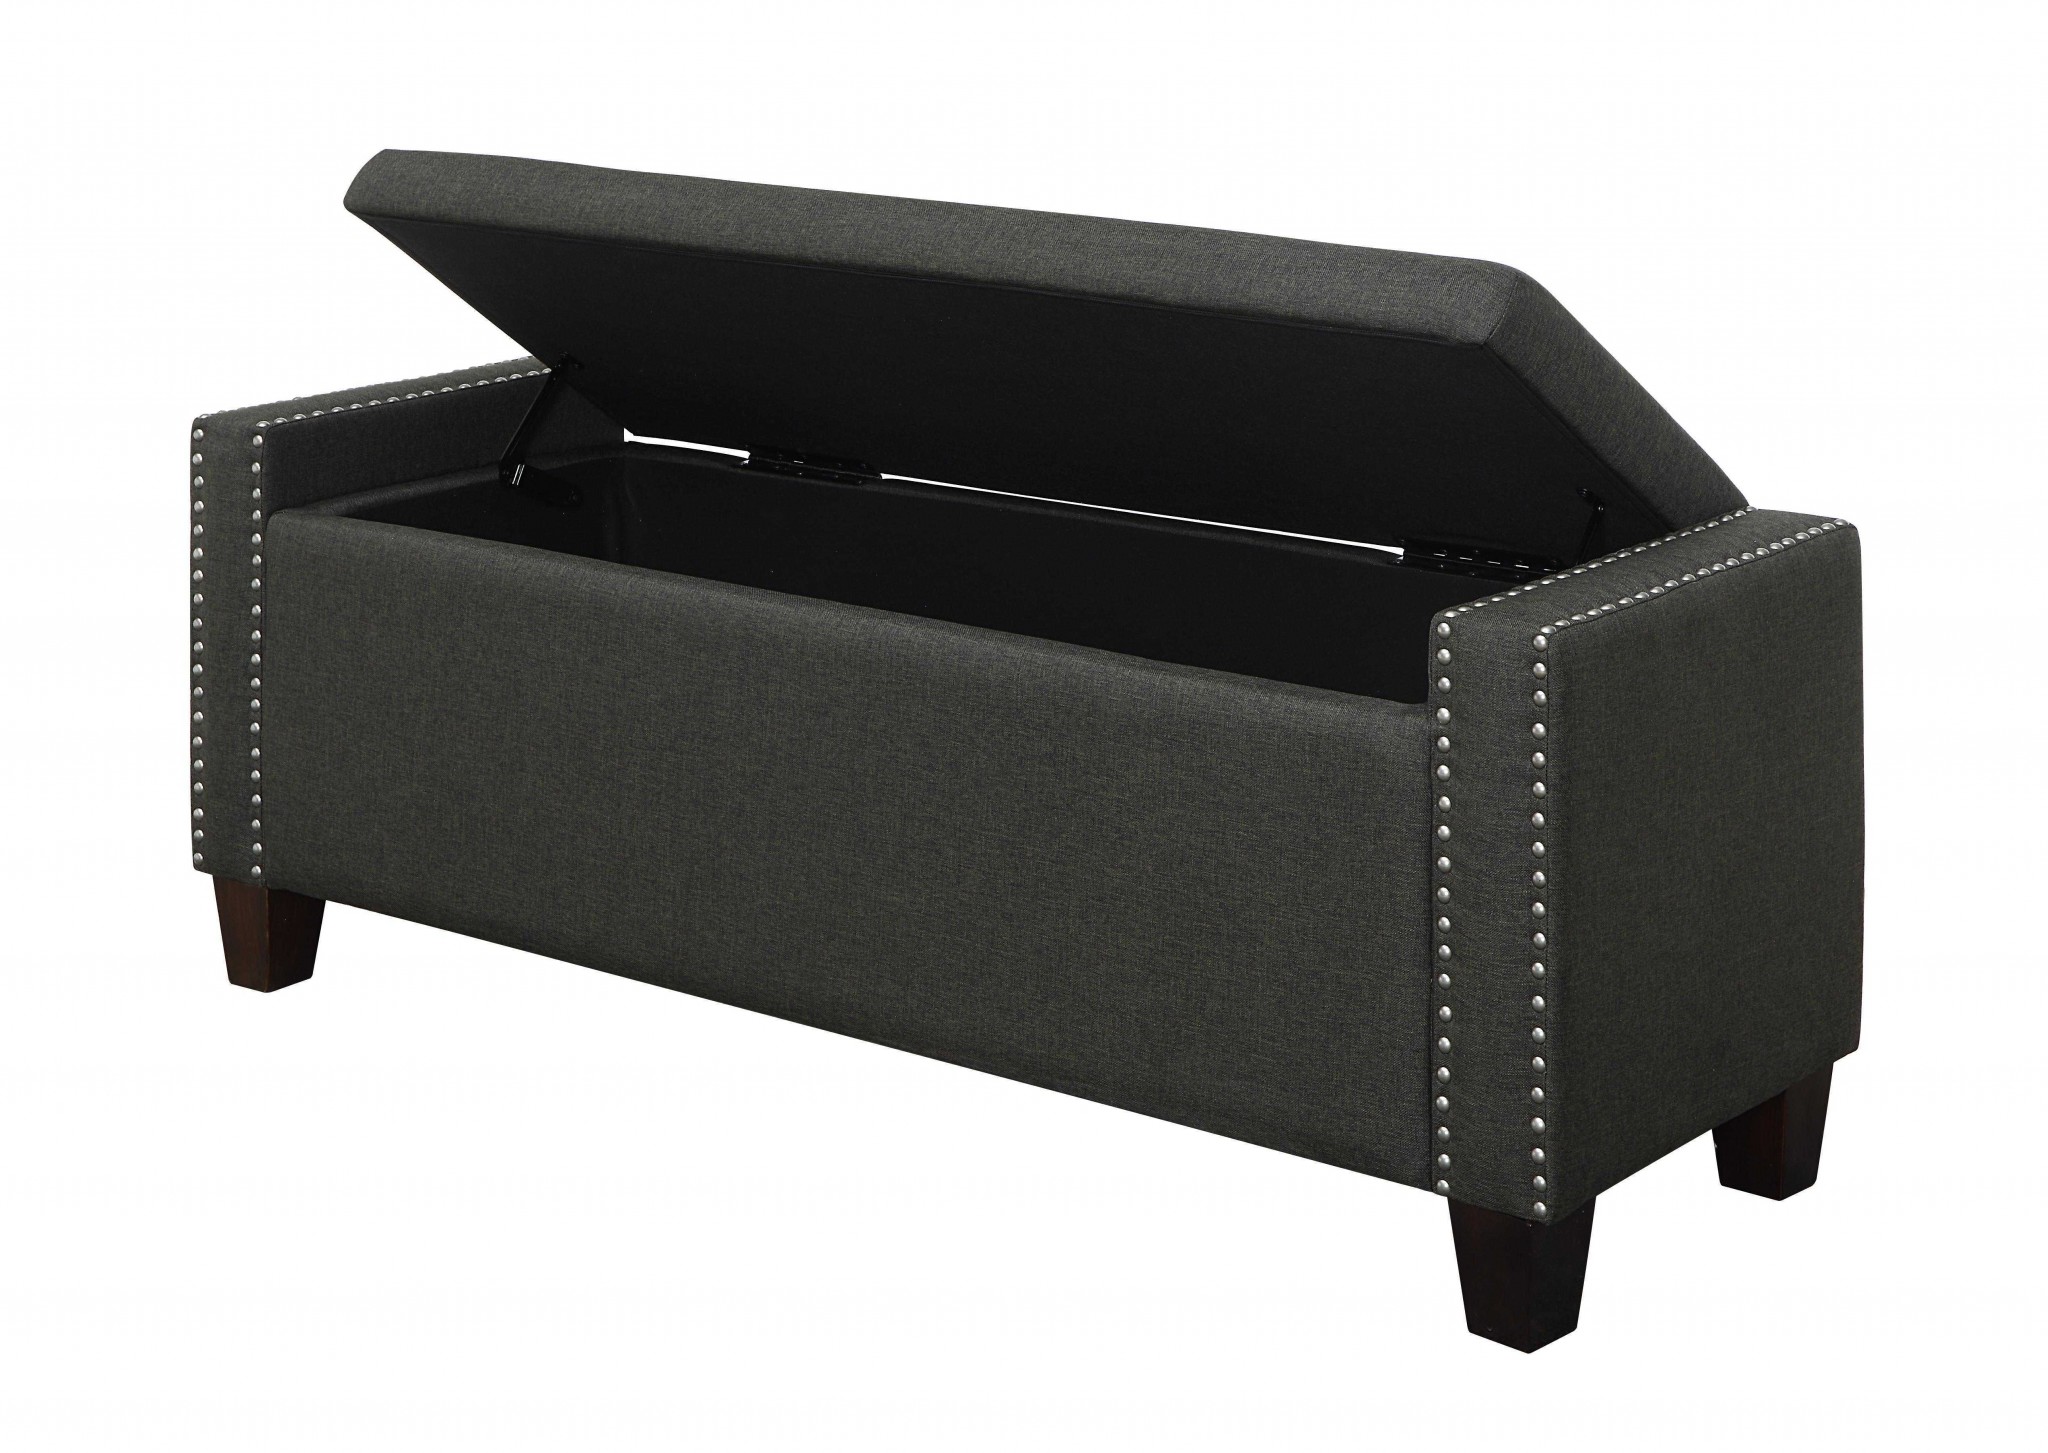 17" X 53" X 19" Dark Olive Linen Upholstery Wood Leg Bench w/Storage